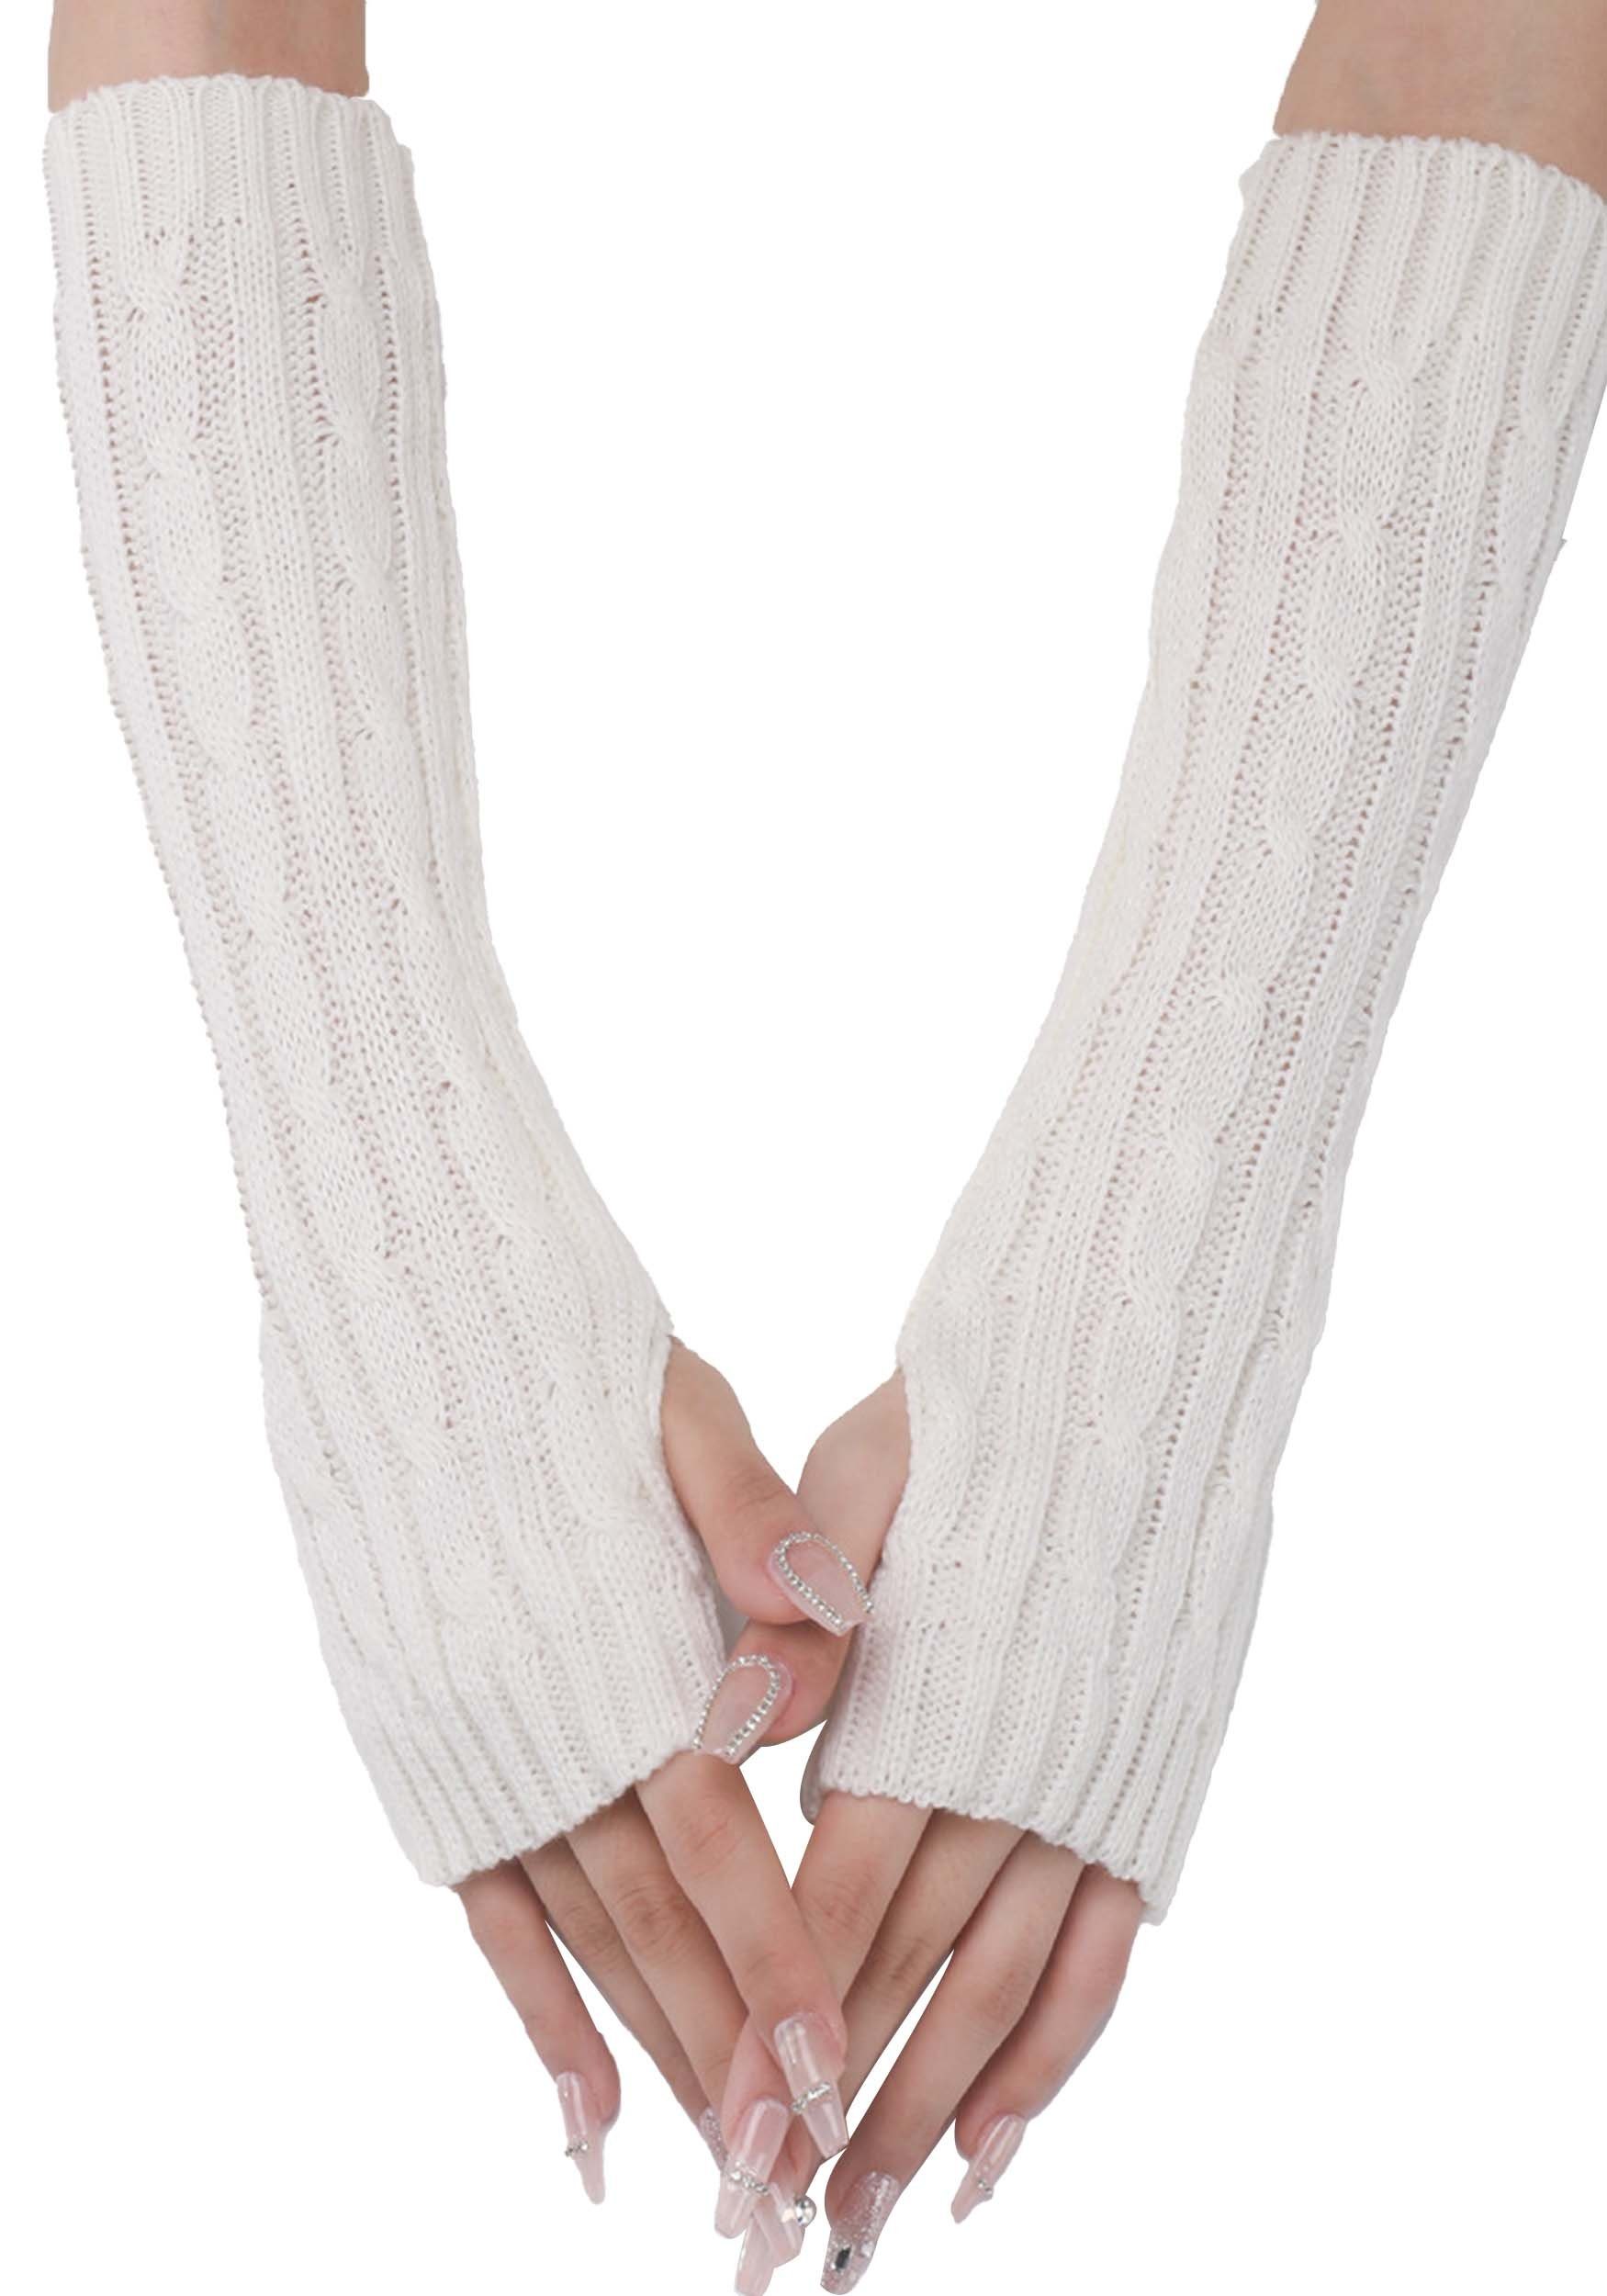 Strickhandschuhe Daumenloch Dehnbare Stricken Weiß MAGICSHE 2 Handschuhe Fingerlose Armwärmer Paar